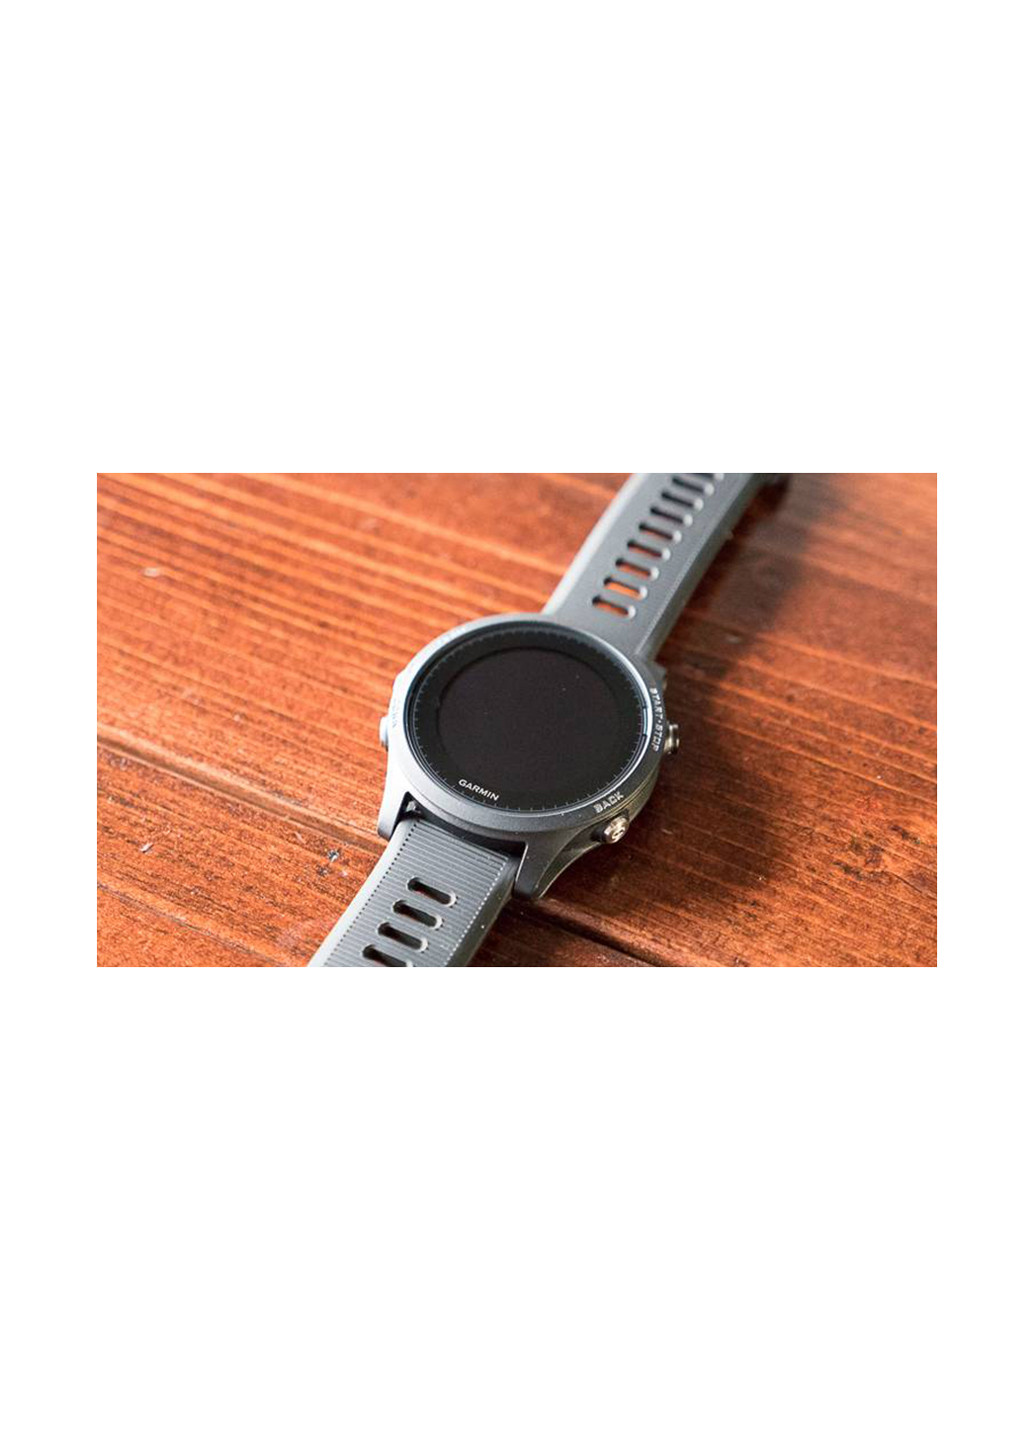 Смарт-годинник Forerunner 935 Black Garmin смарт-часы garmin forerunner 935 black (135039762)